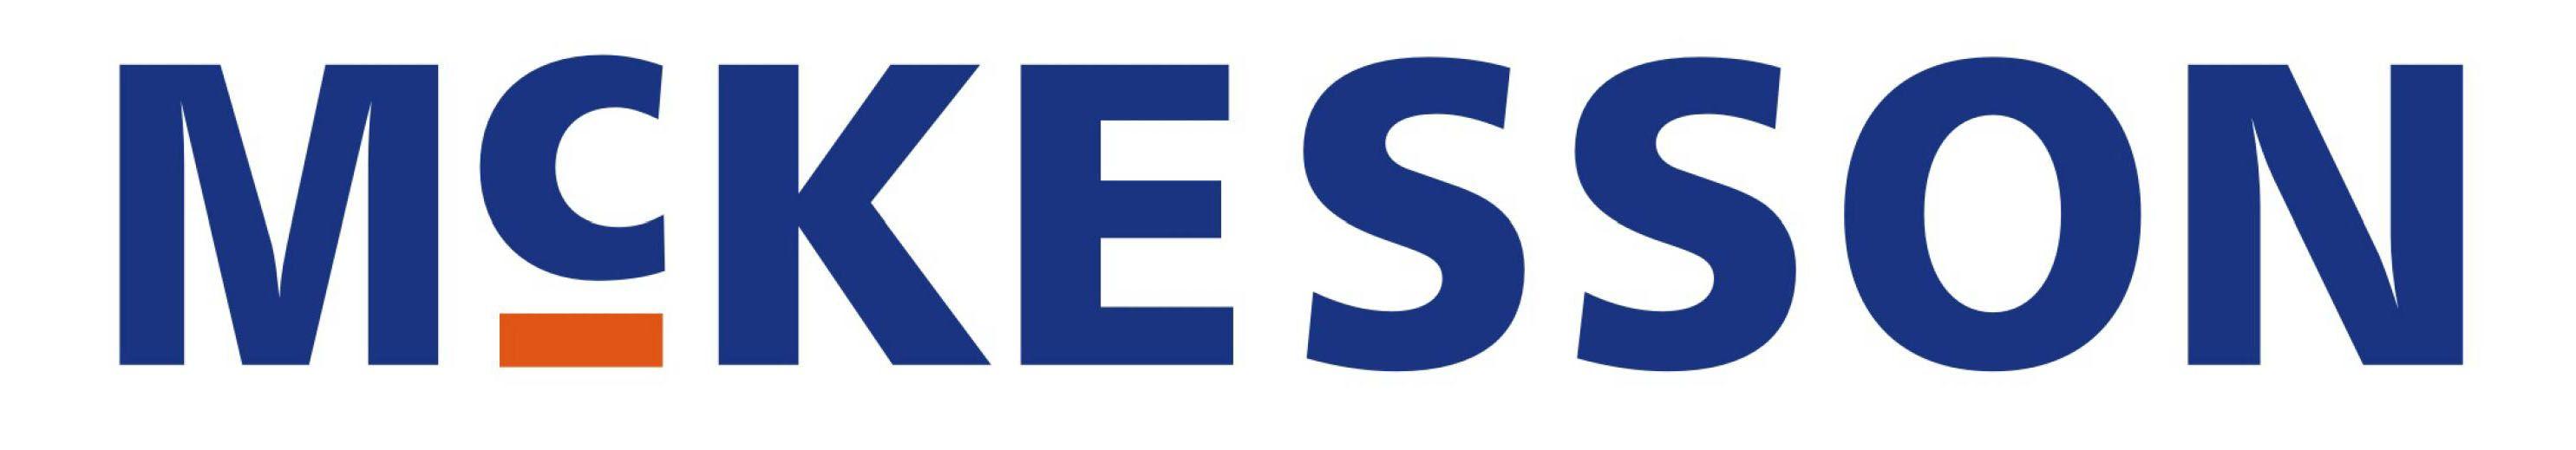 McKesson Logo - mckesson-logo - CoSourcing Partners